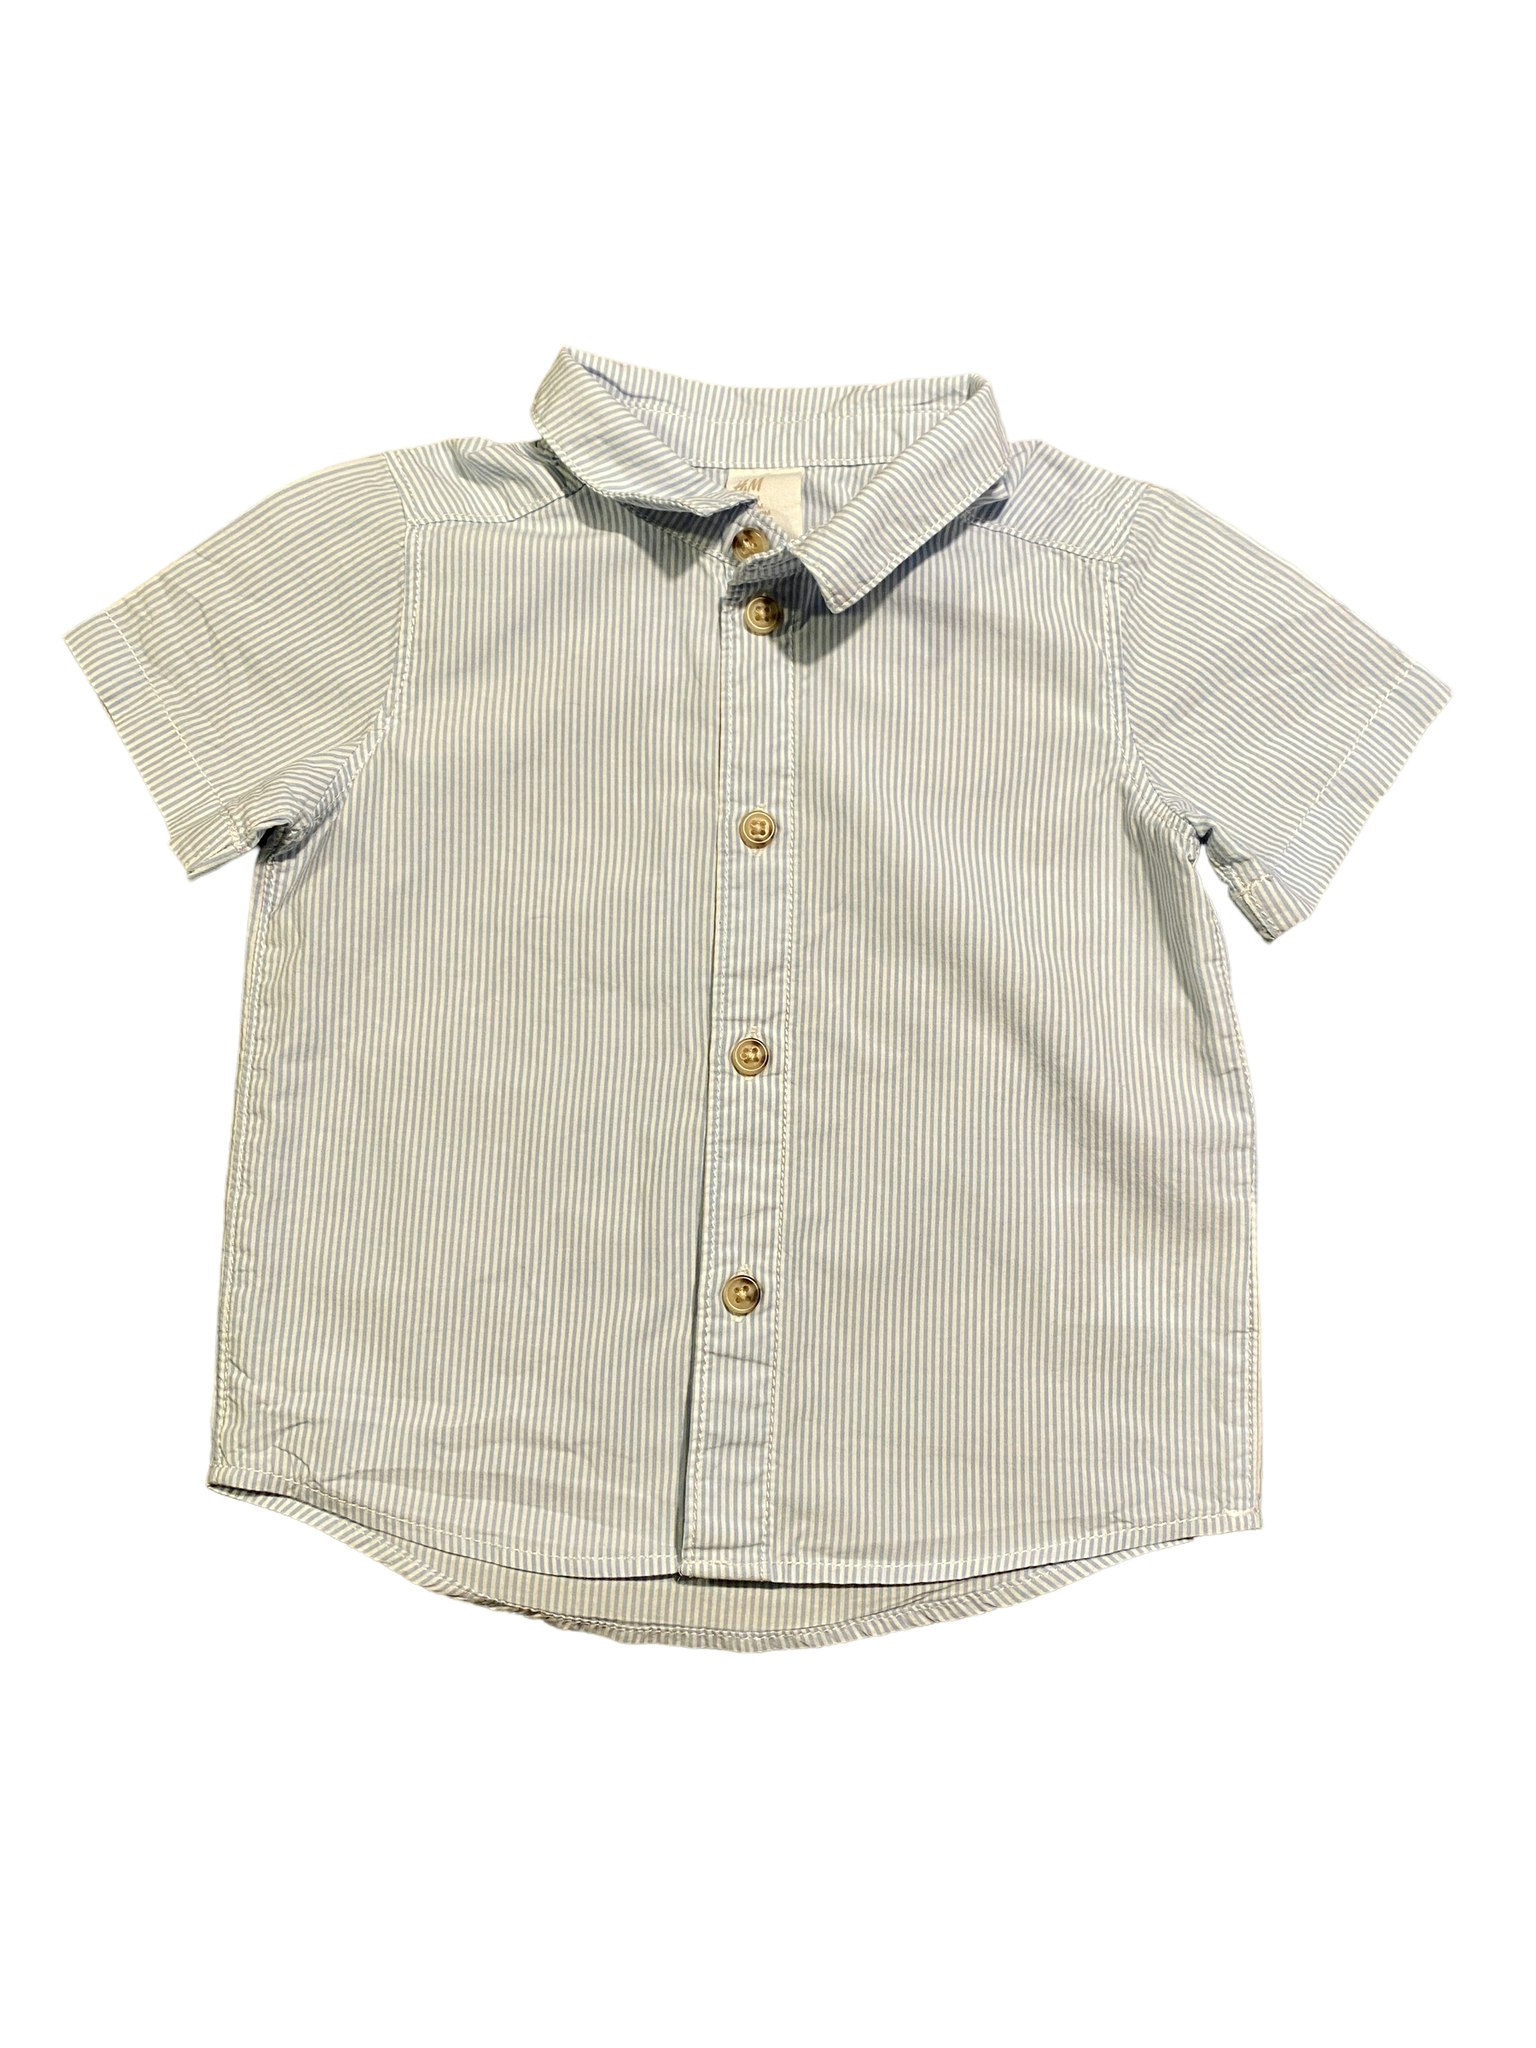 Randig kortärmad skjorta, HM, stl 74